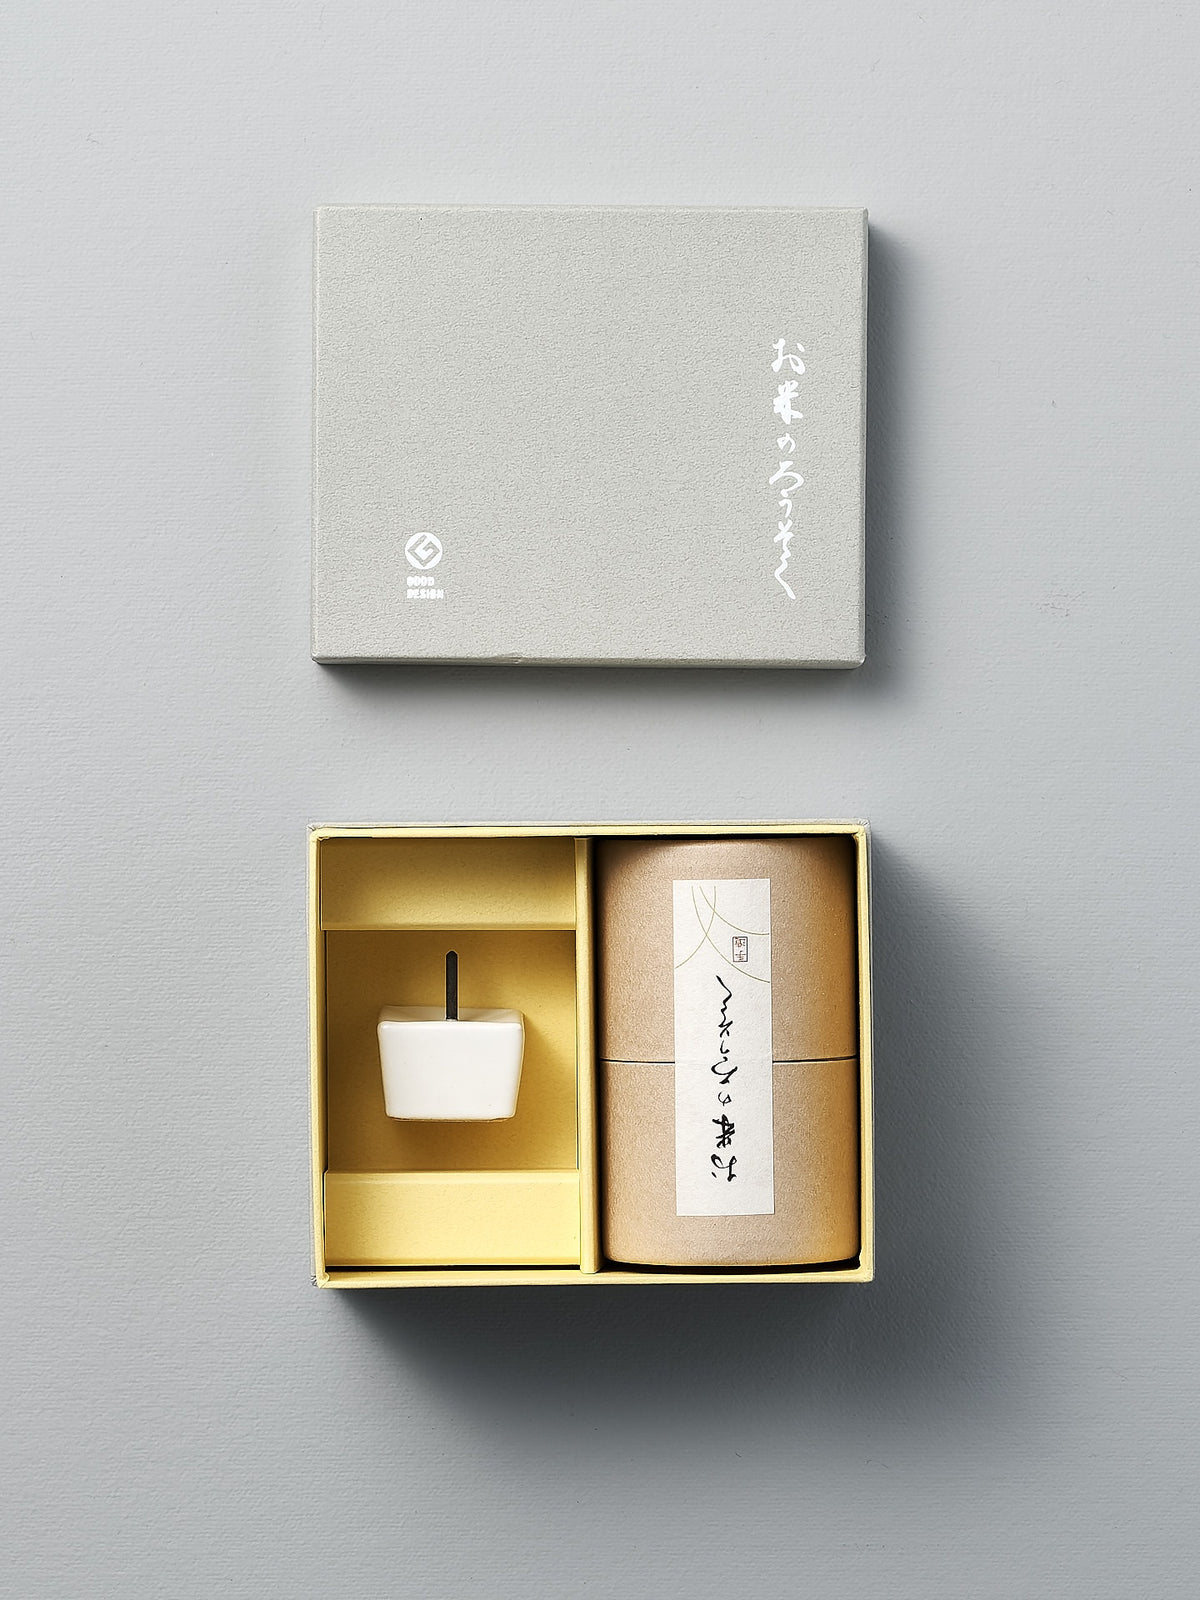 Daiyo Rice Wax Candle &amp; Iron Stand Gift Box Set - 20pcs on a white surface.